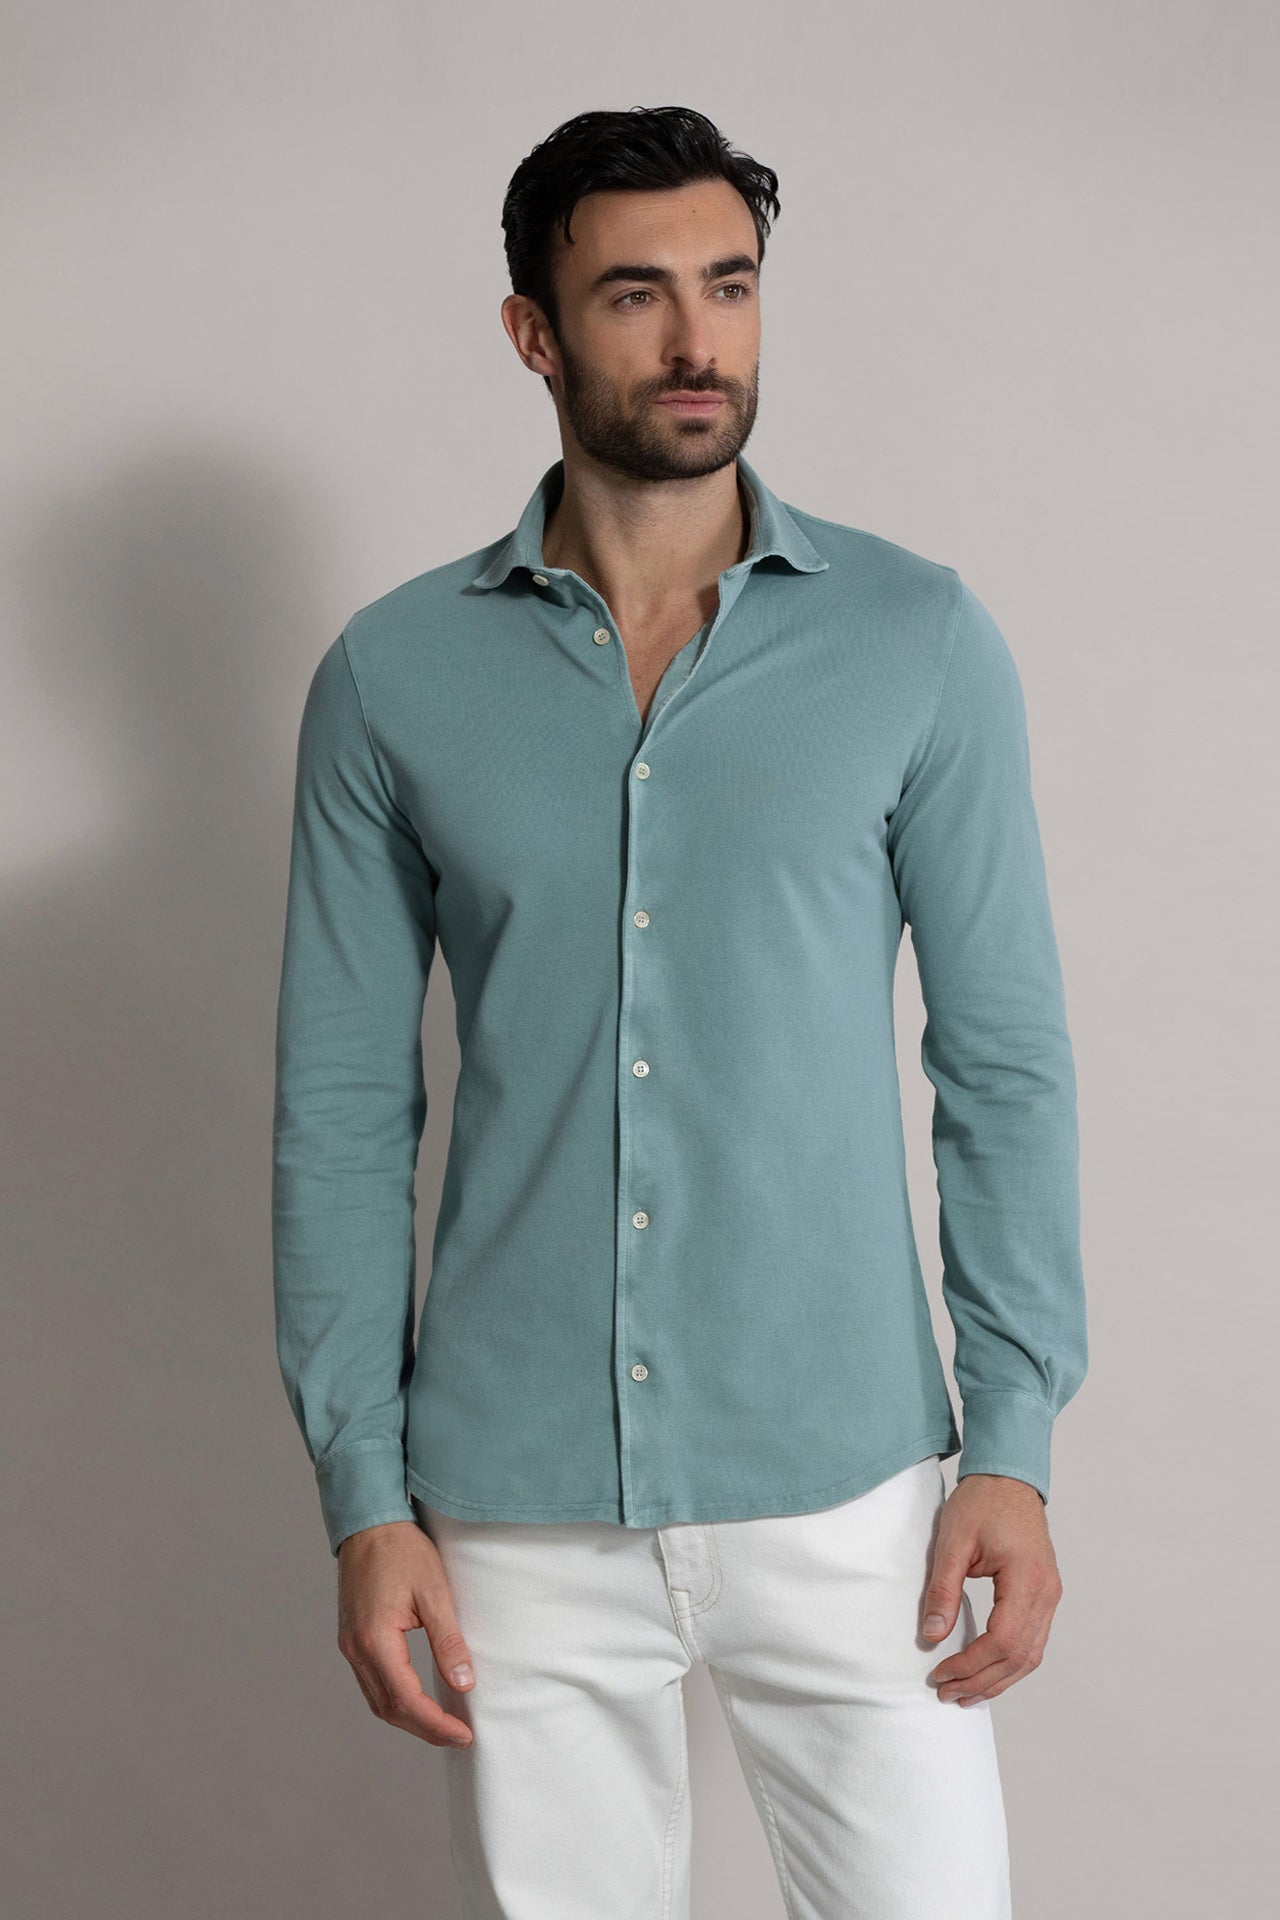 Designer shirt in organic cotton: sea green